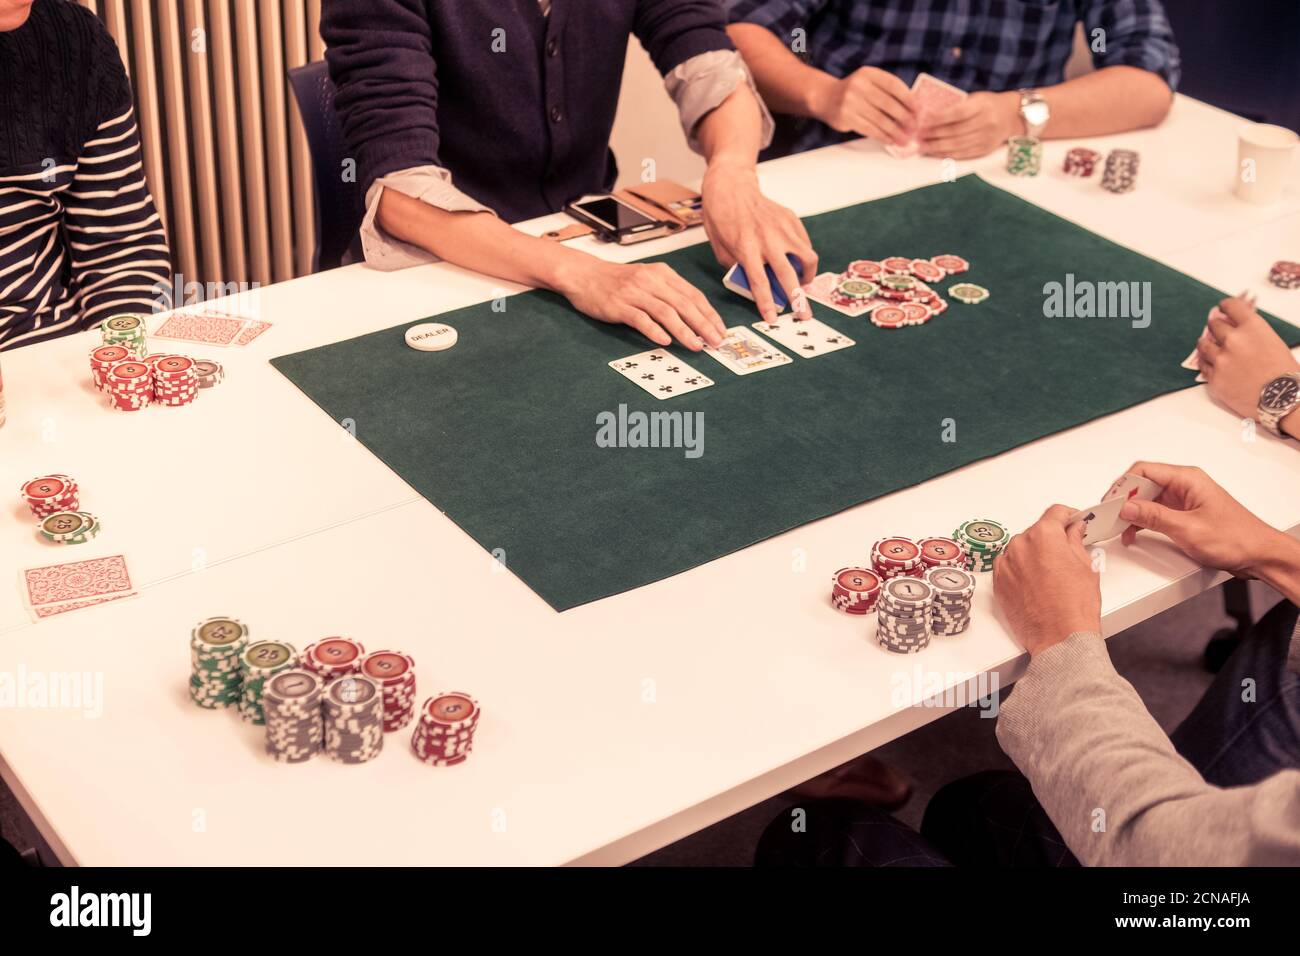 Image de Texas Holdem (poker) Banque D'Images